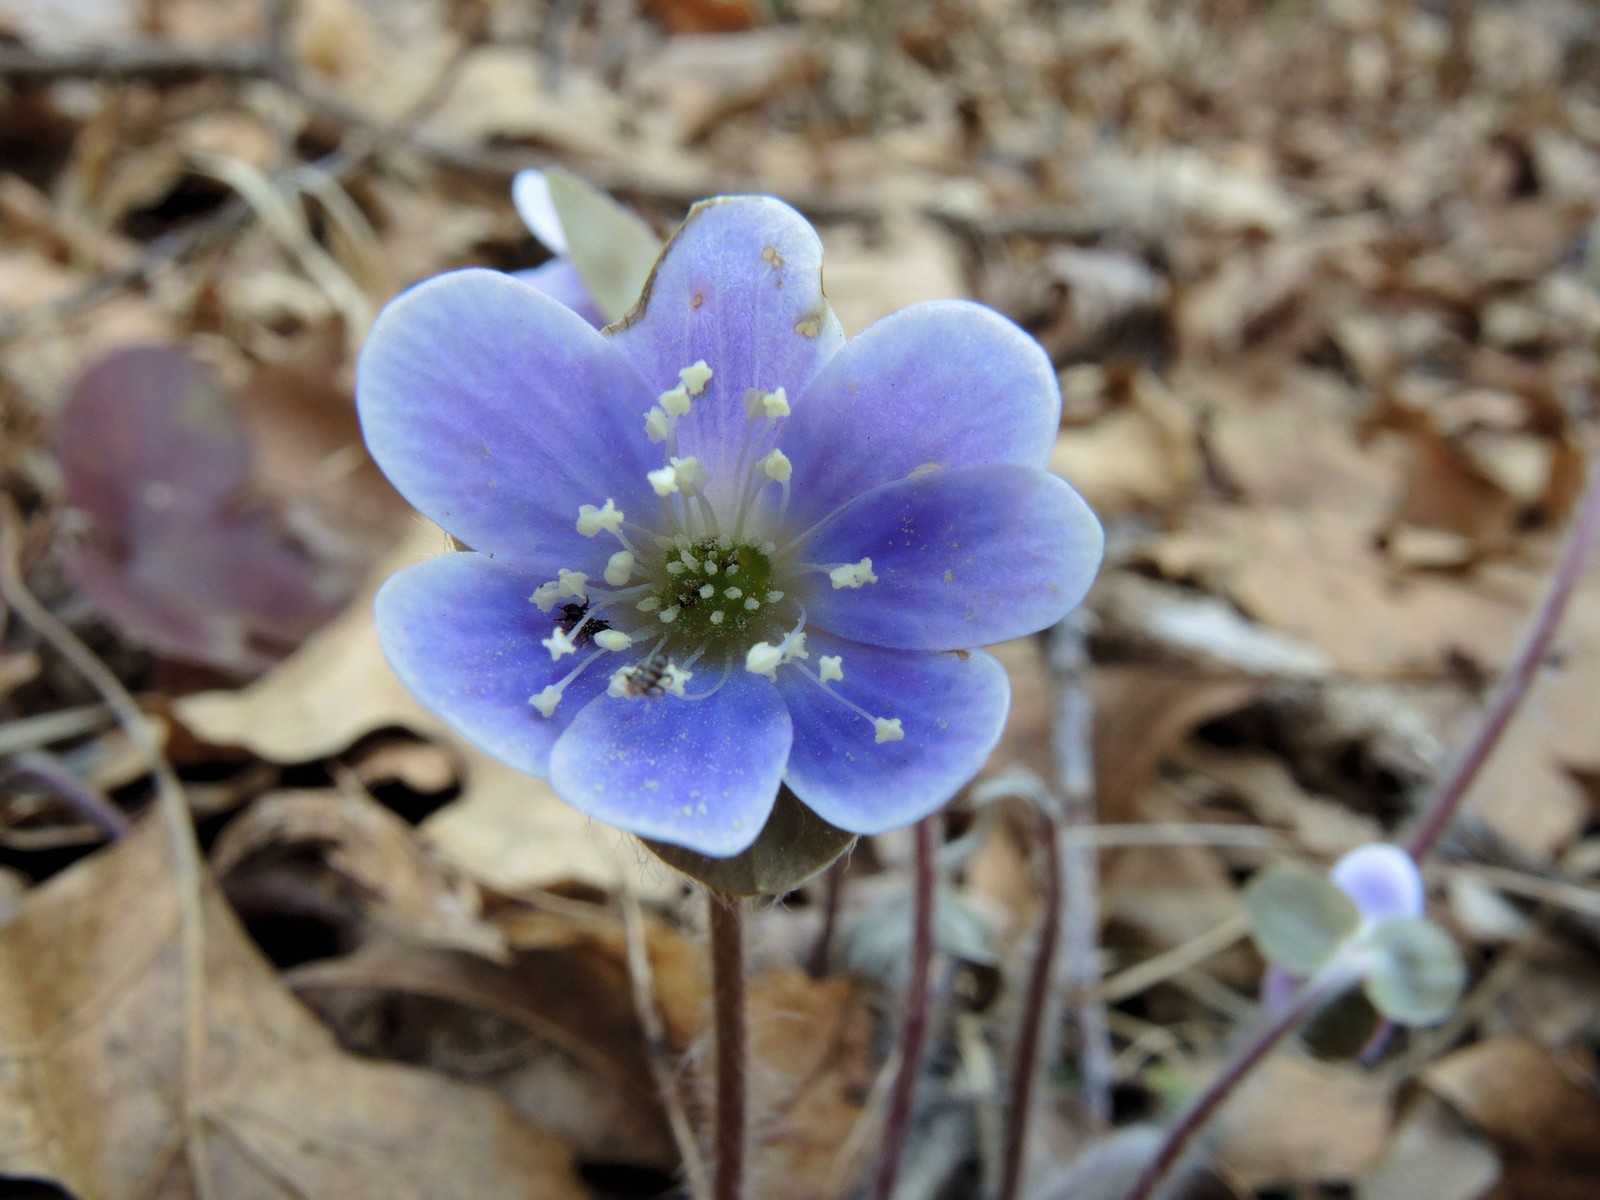 201504261740004 Hepatica (Hepatica nobilis) blue flowers - Bald Mountain RA, Oakland Co, MI.JPG